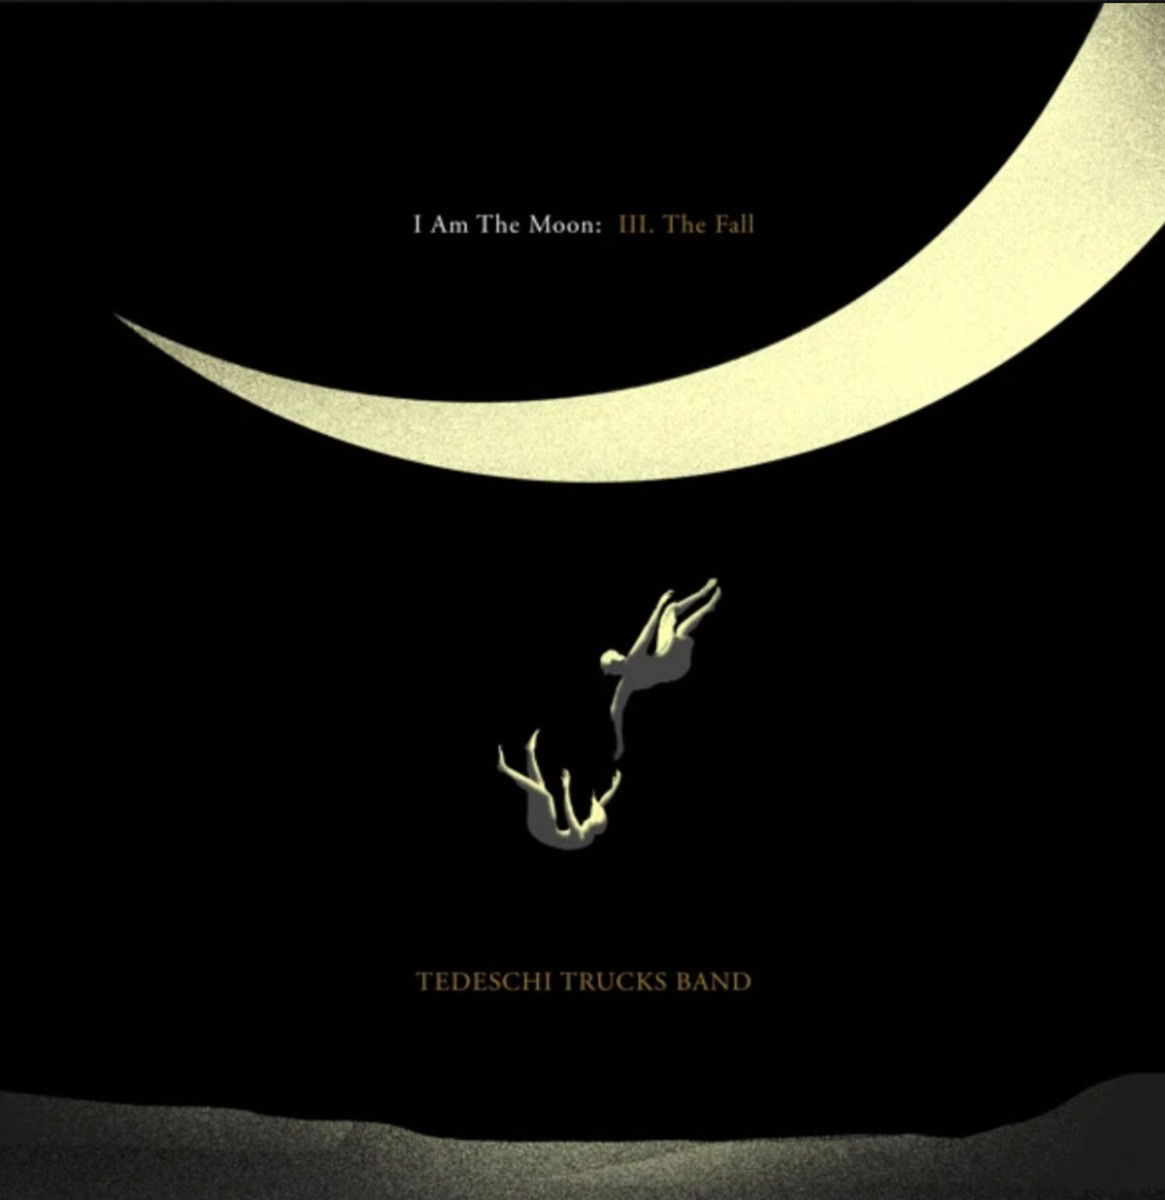 Tedeschi Trucks Band - I Am The Moon: III. The Fall LP